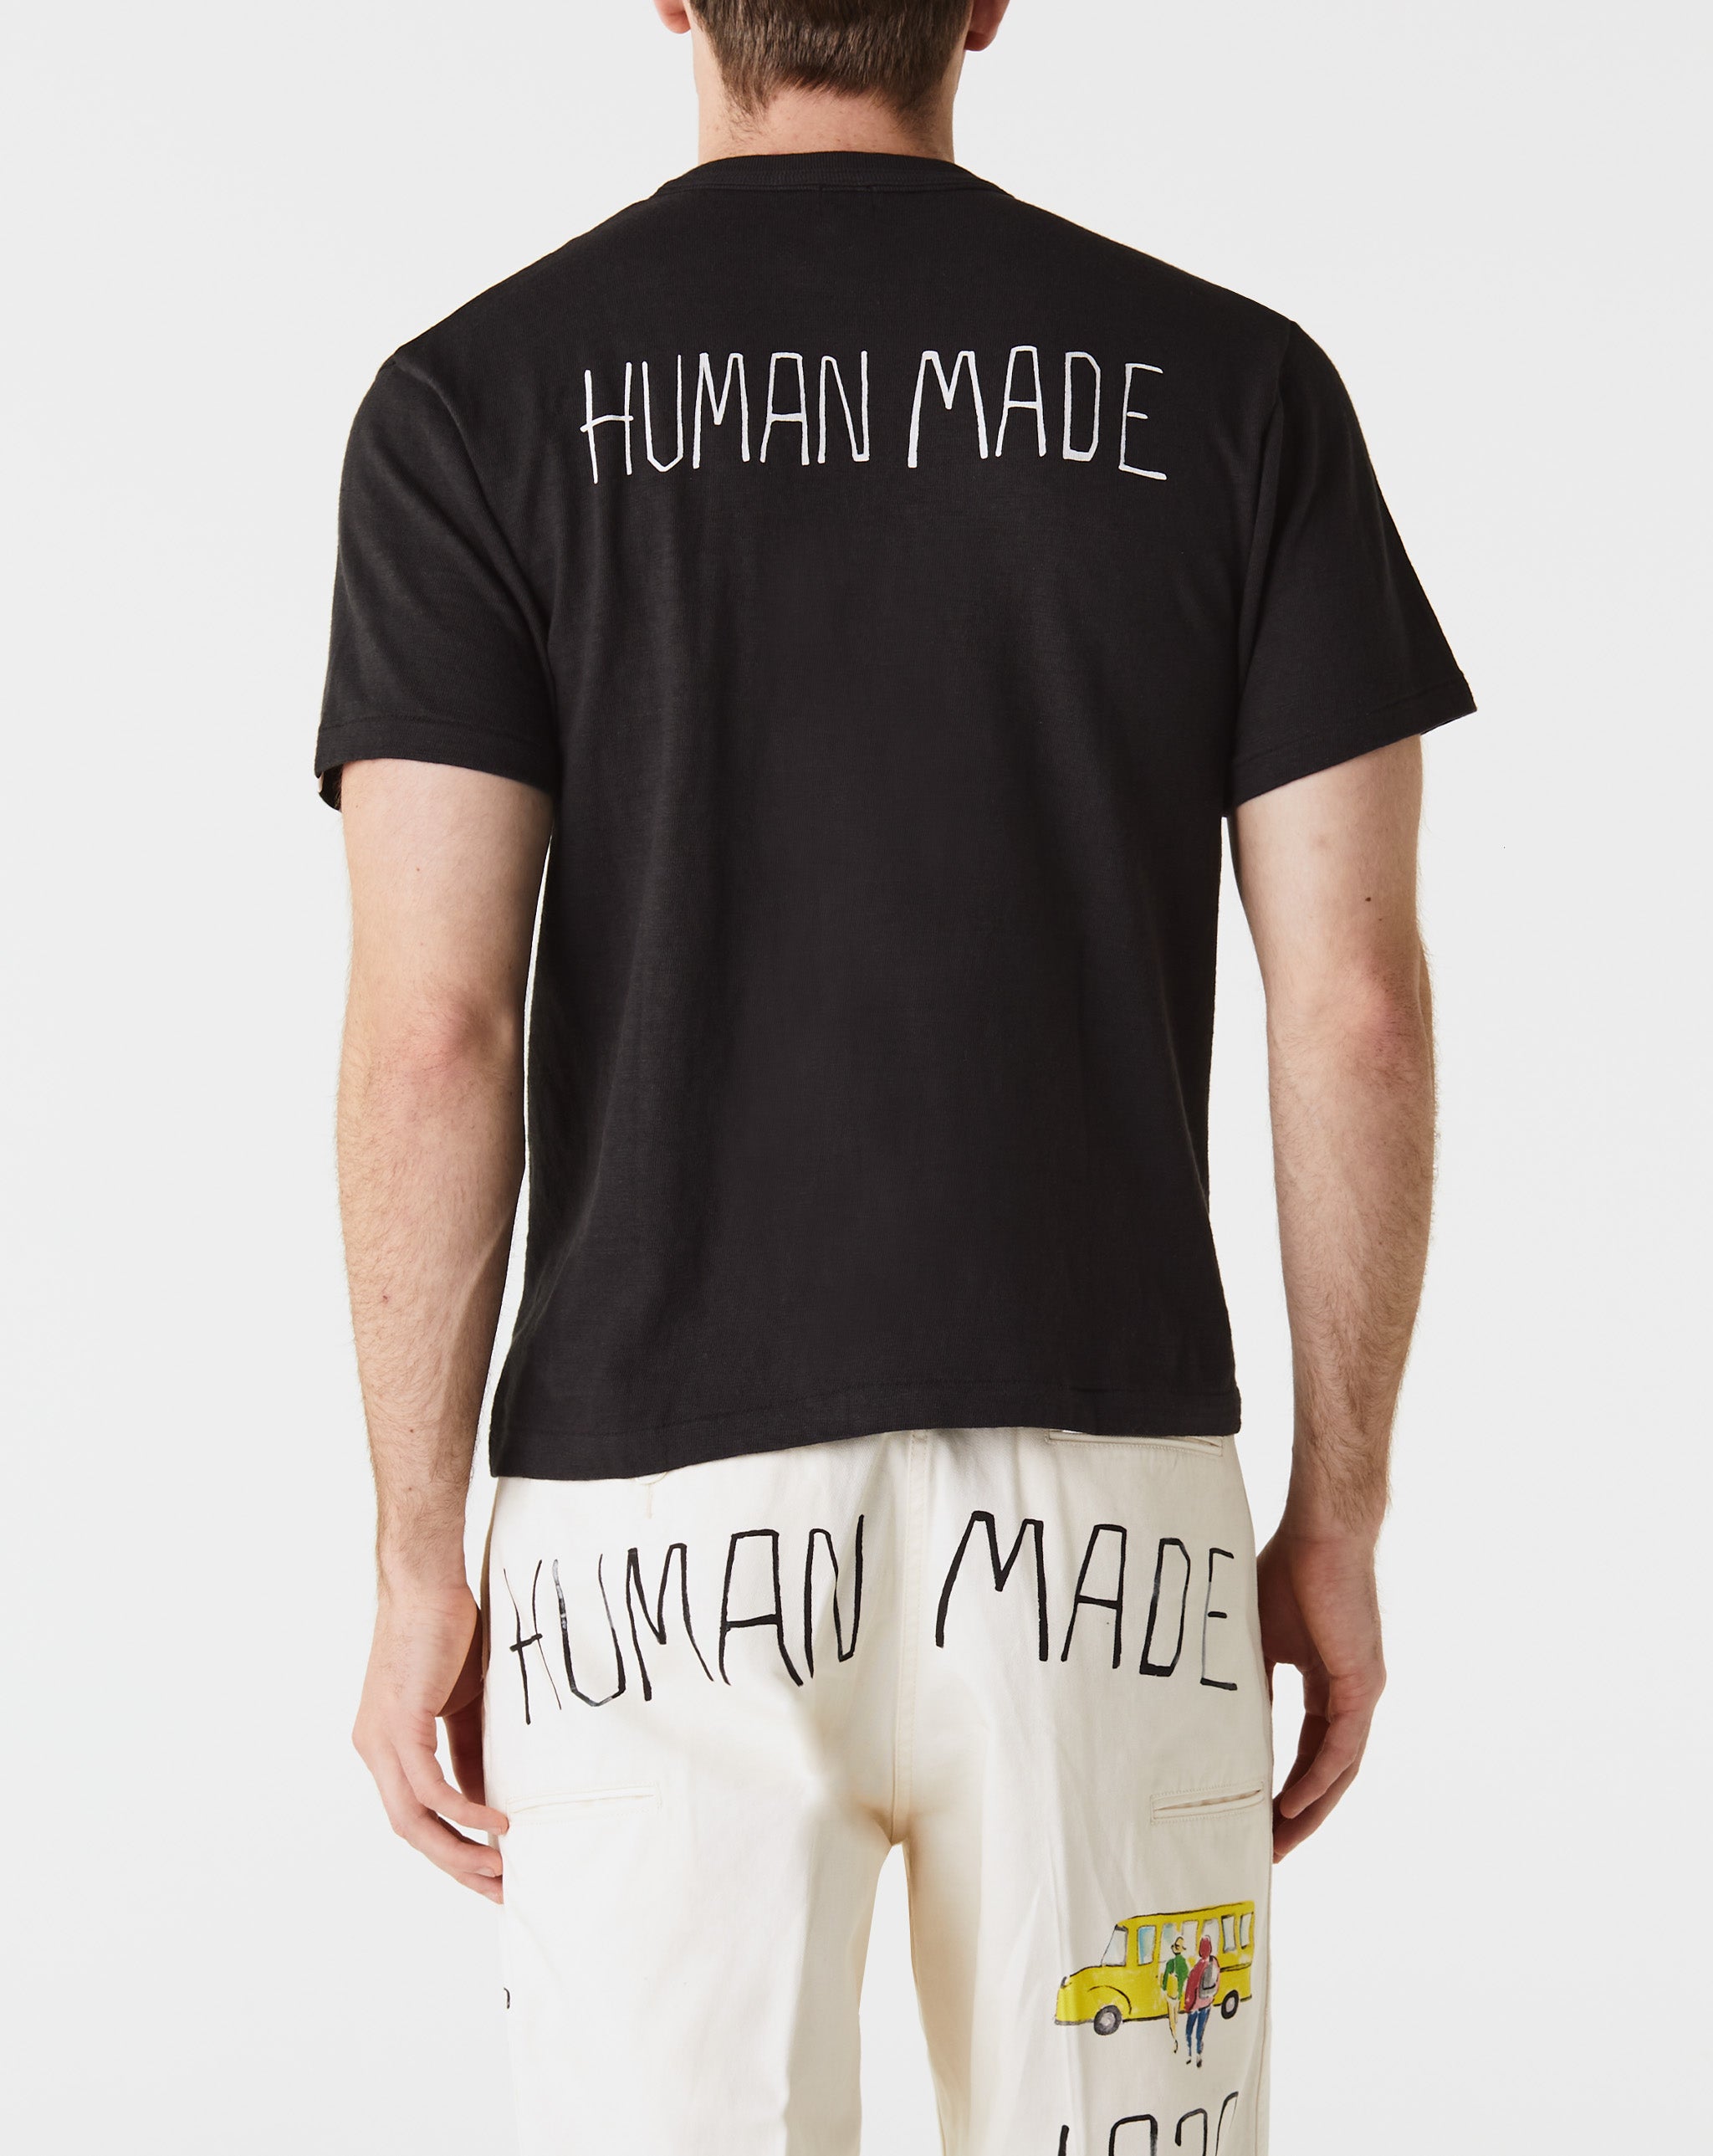 Human Made Graphic T-Shirt #2  - XHIBITION